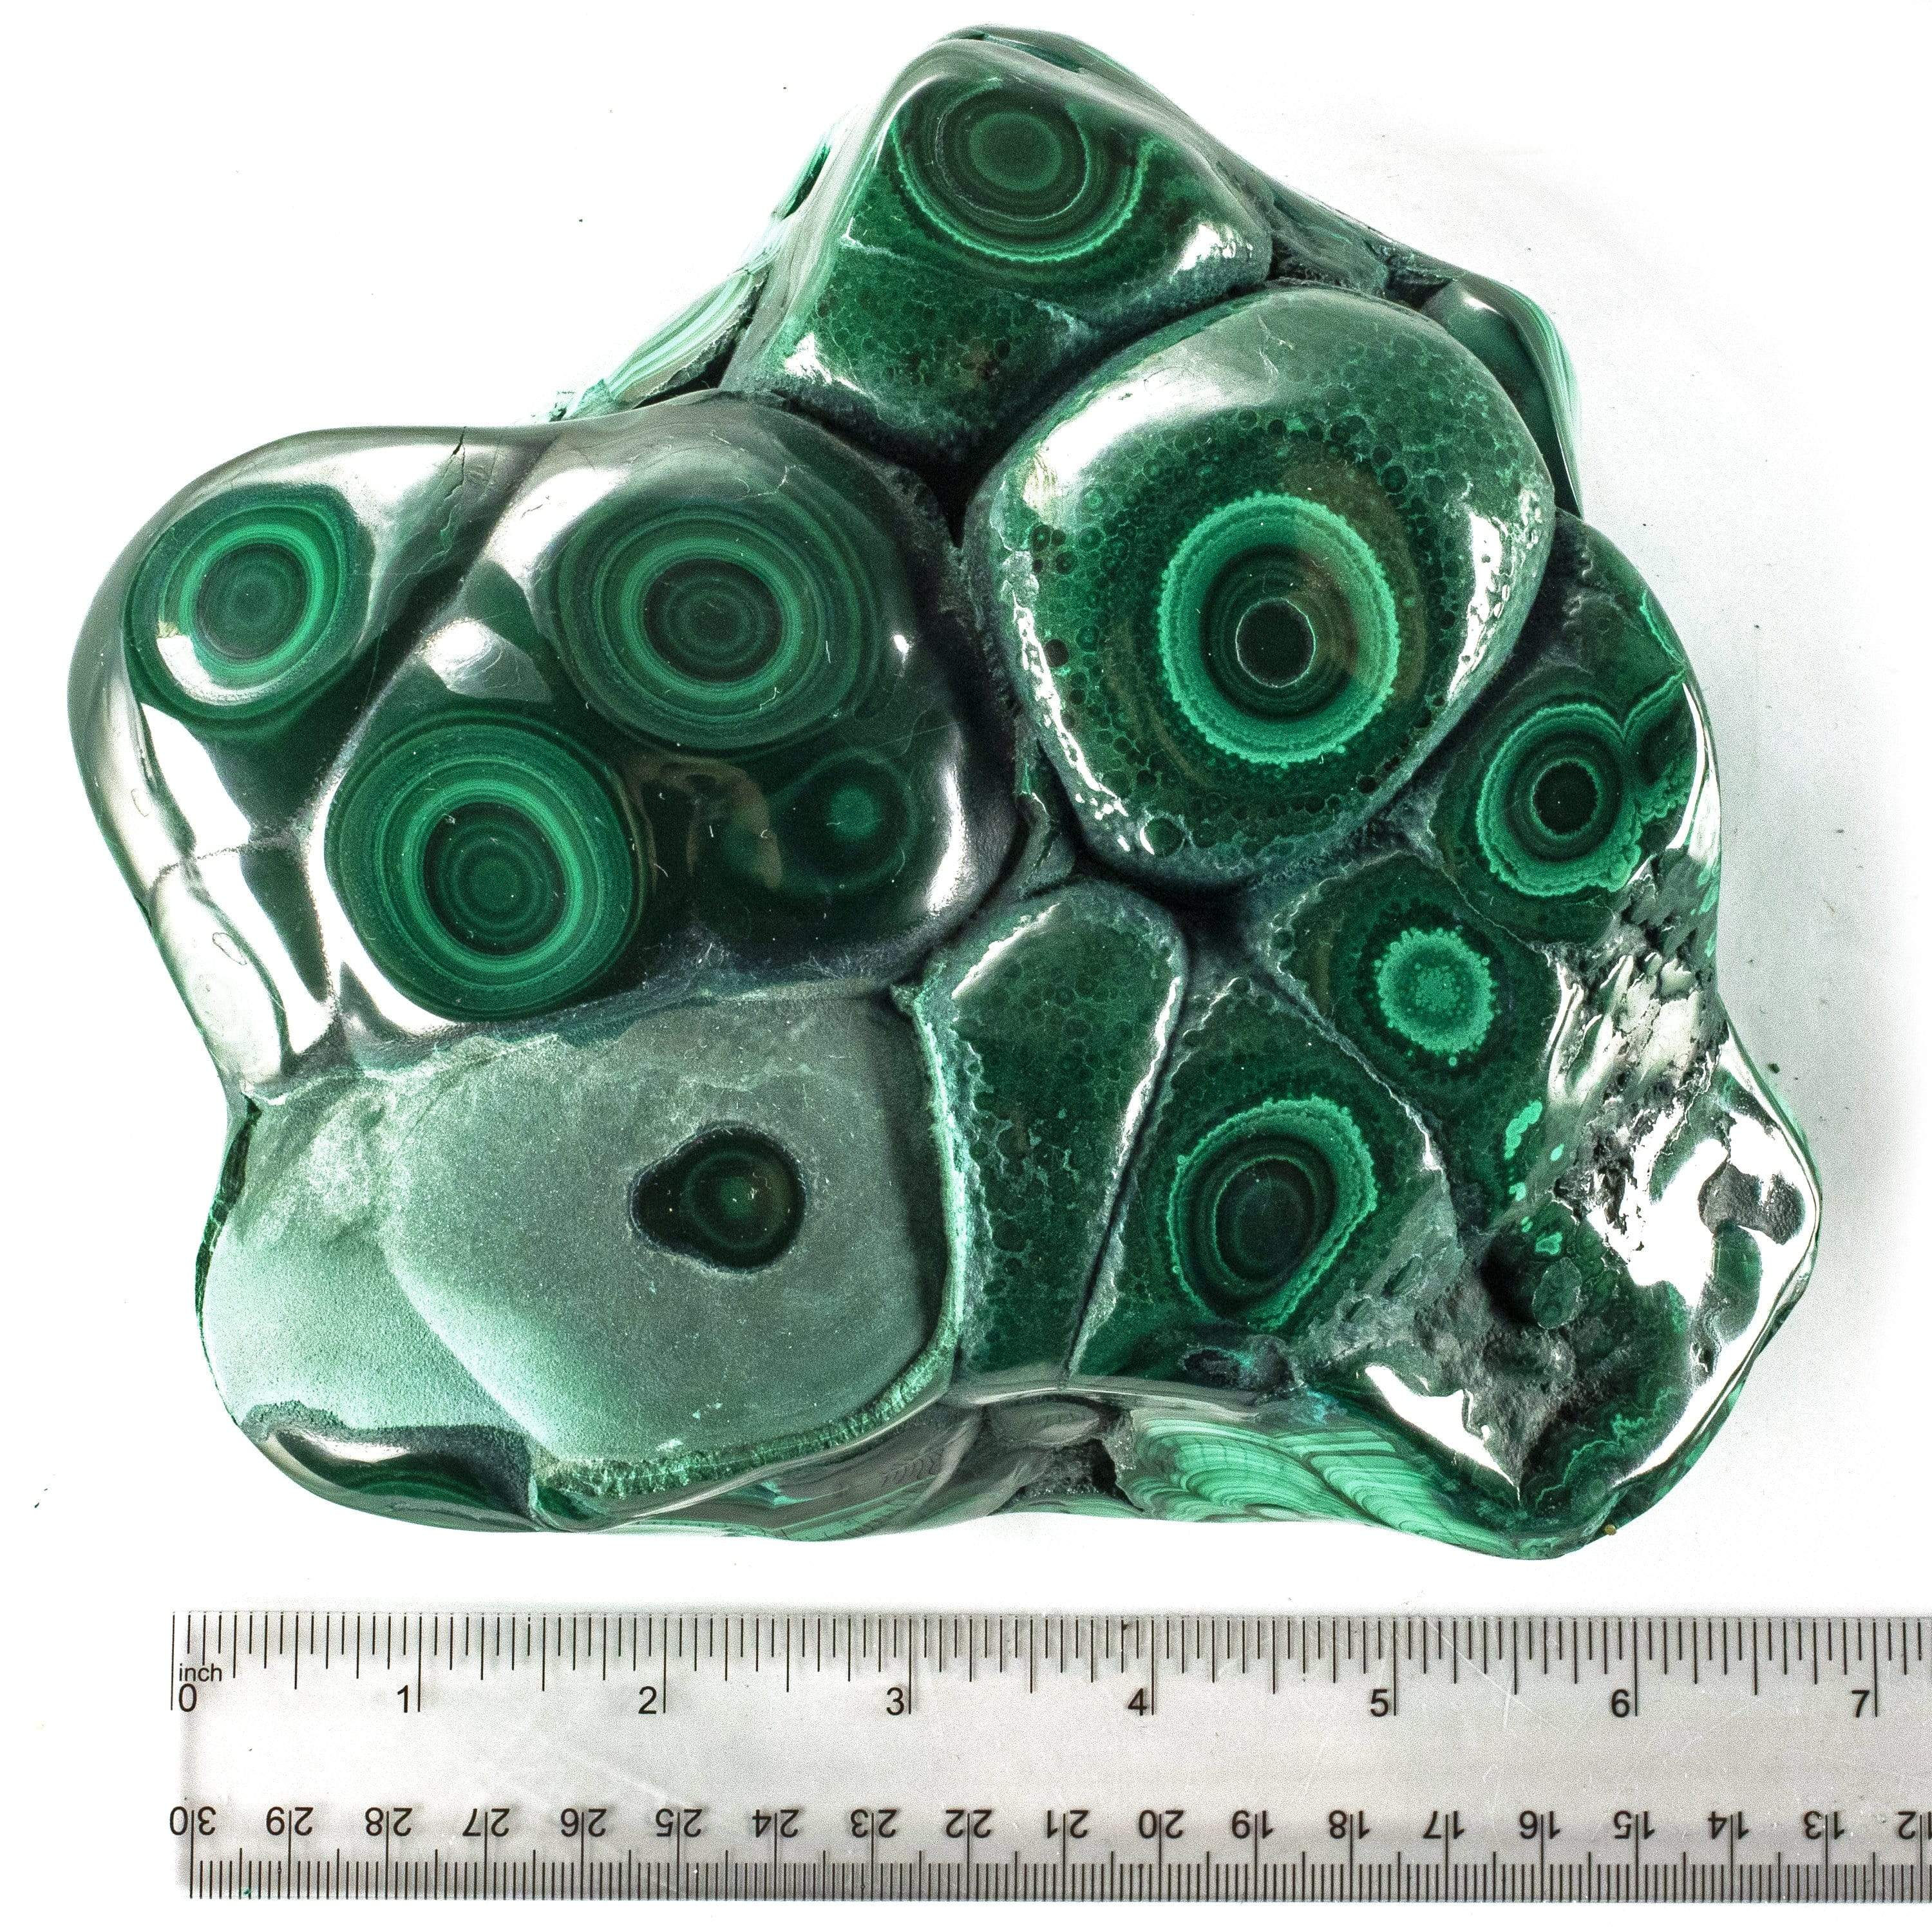 Kalifano Malachite Rare Natural Green Malachite Polished Freeform Specimen from Congo - 3.7 kg / 8 lbs MA2300.001